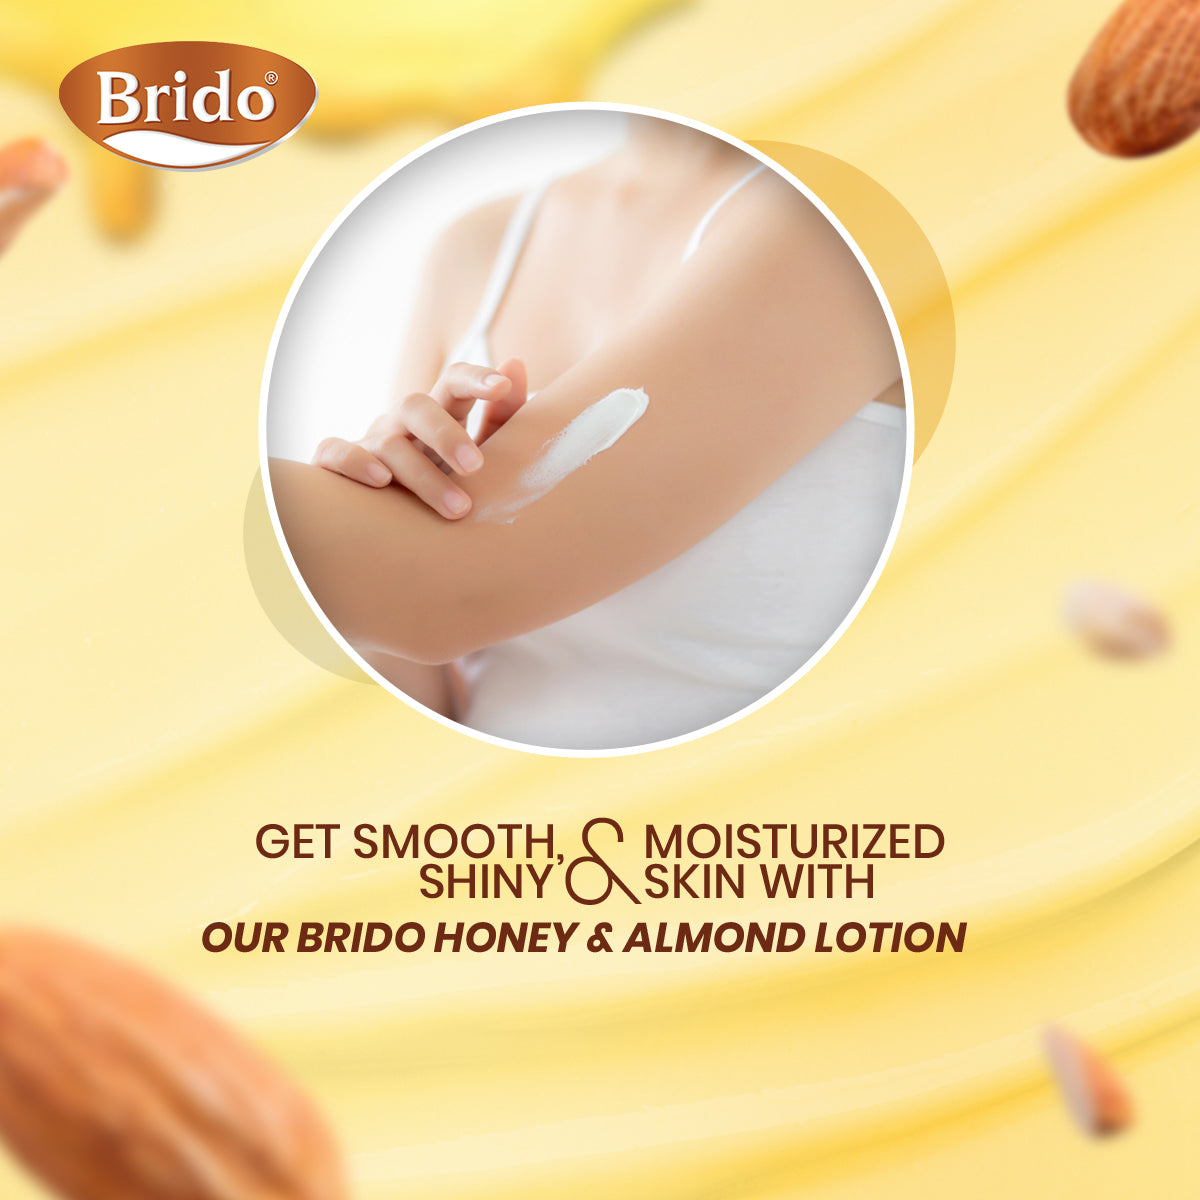 Brido Honey & Almond Body Lotion (Extra Soft & Silky Skin)